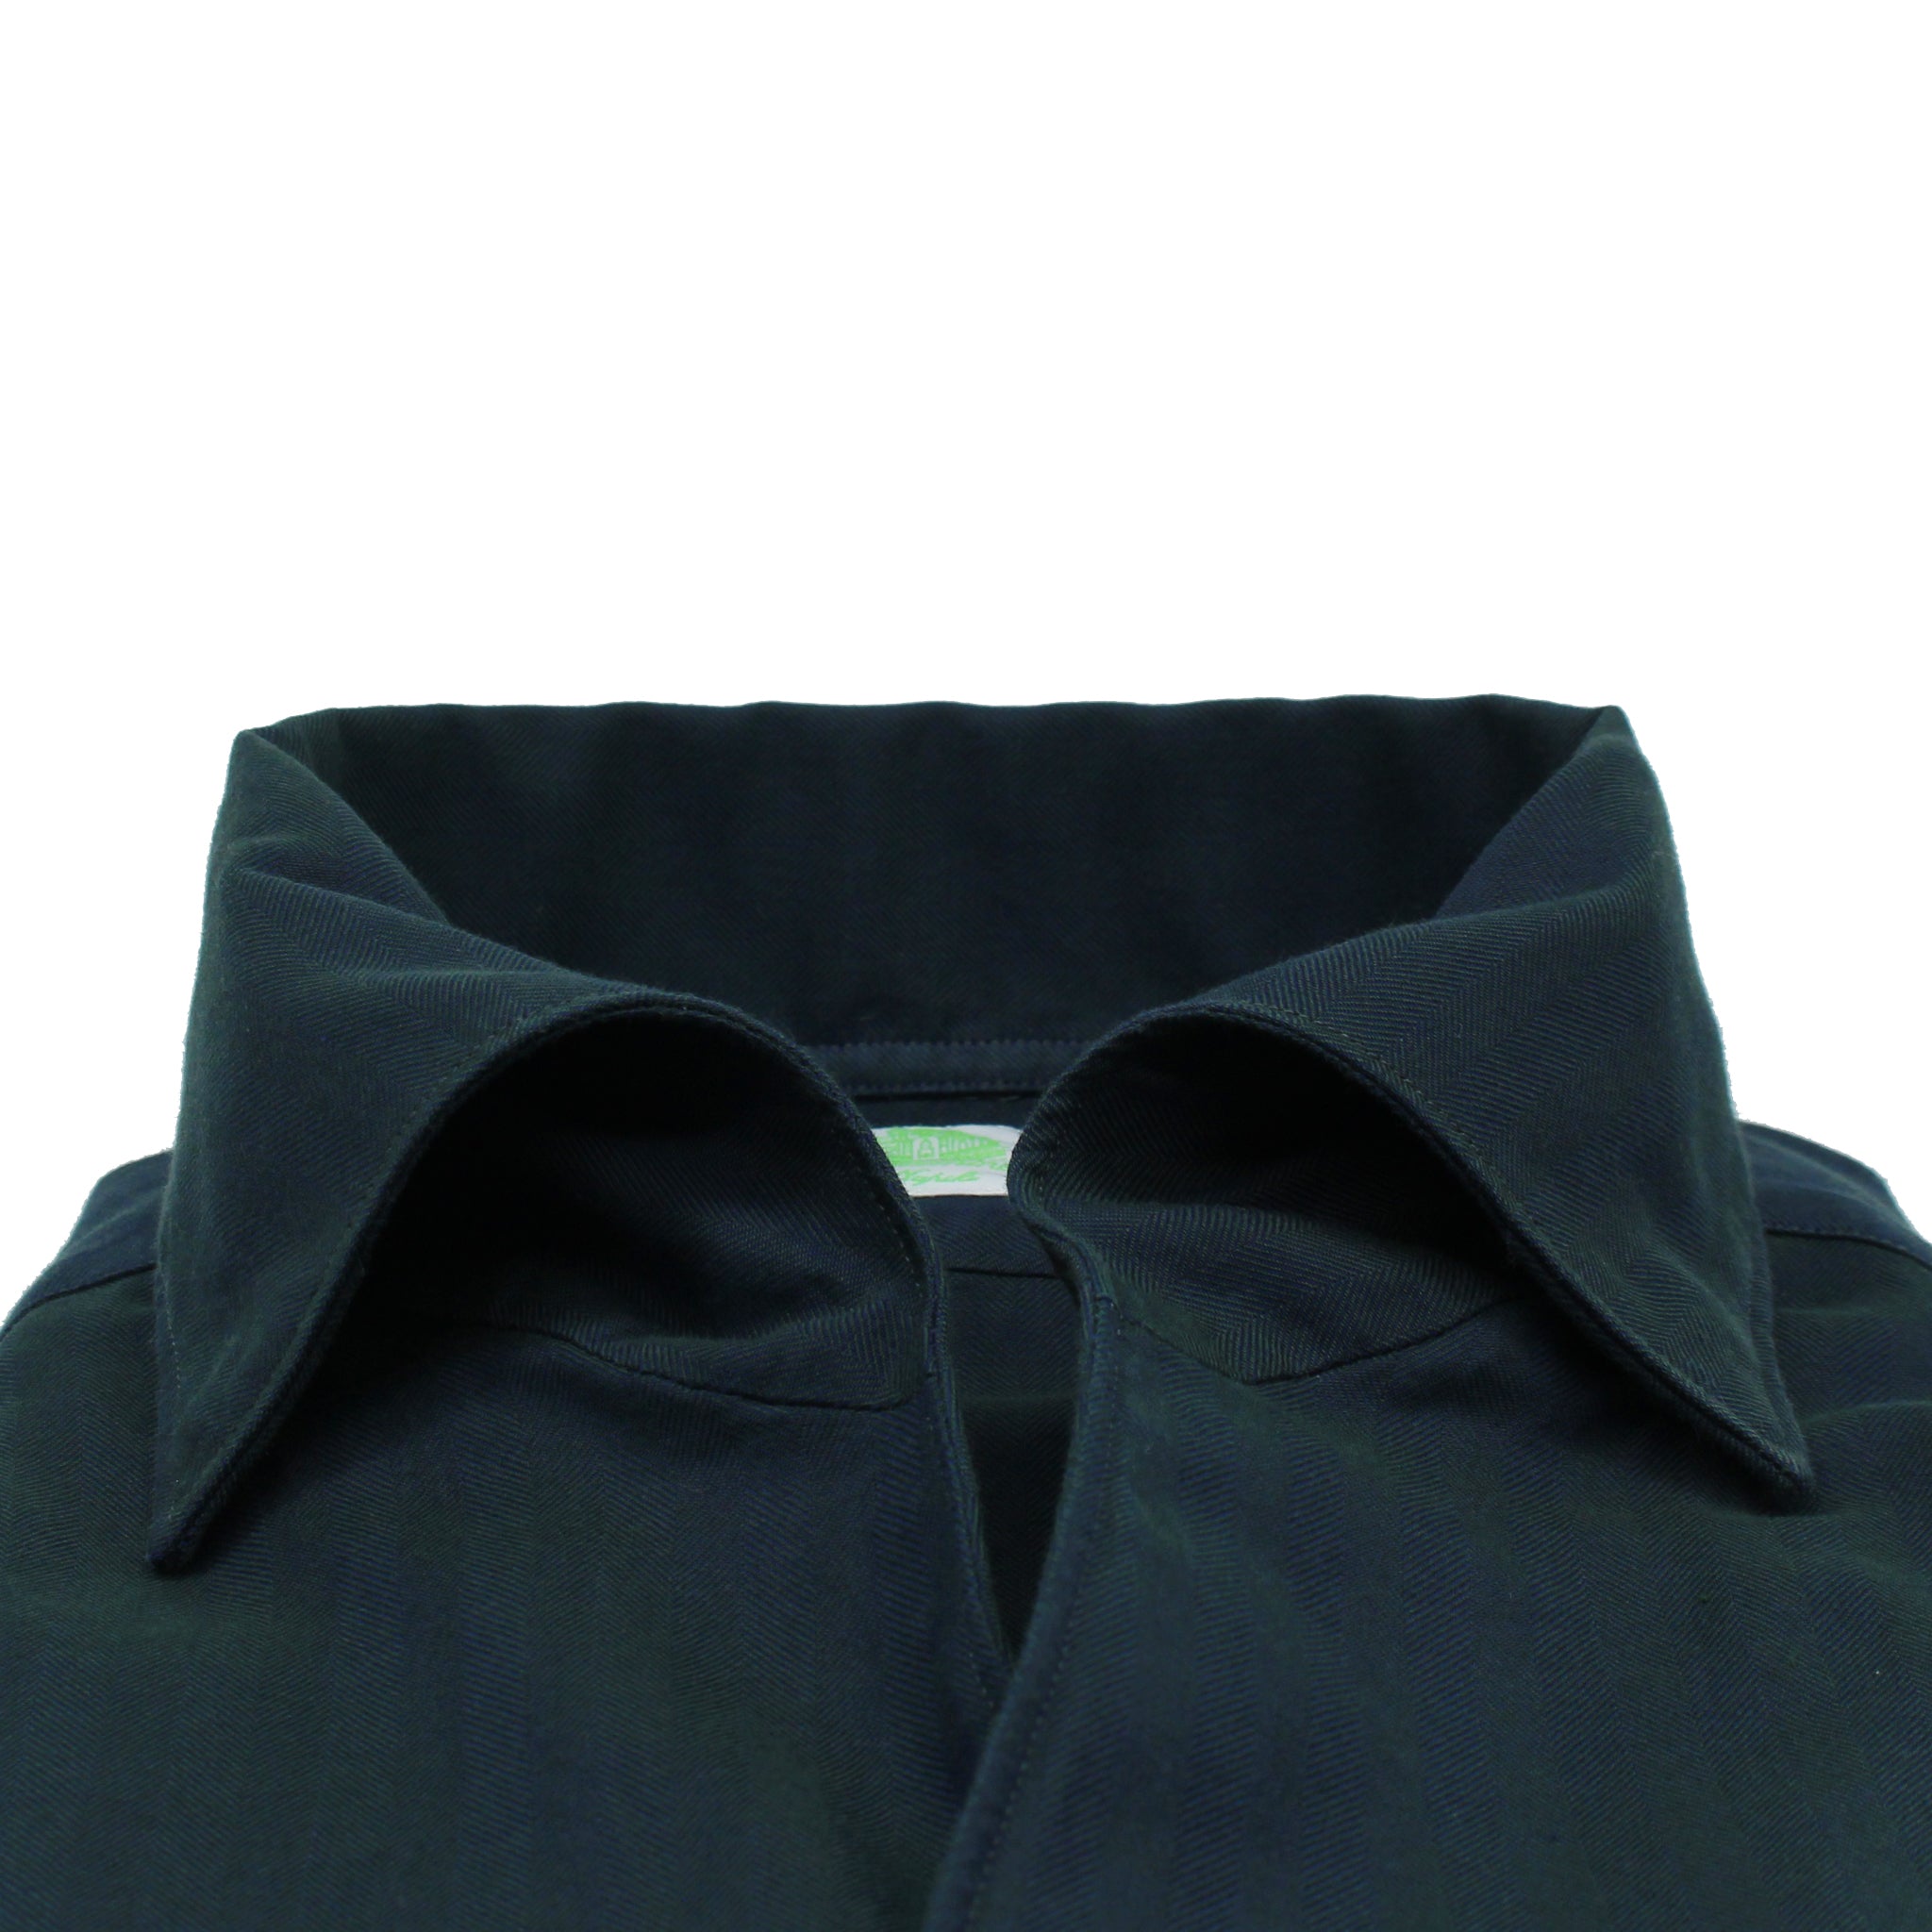 Gaeta sport shirt with regular fit. Ustica collar herringbone effect